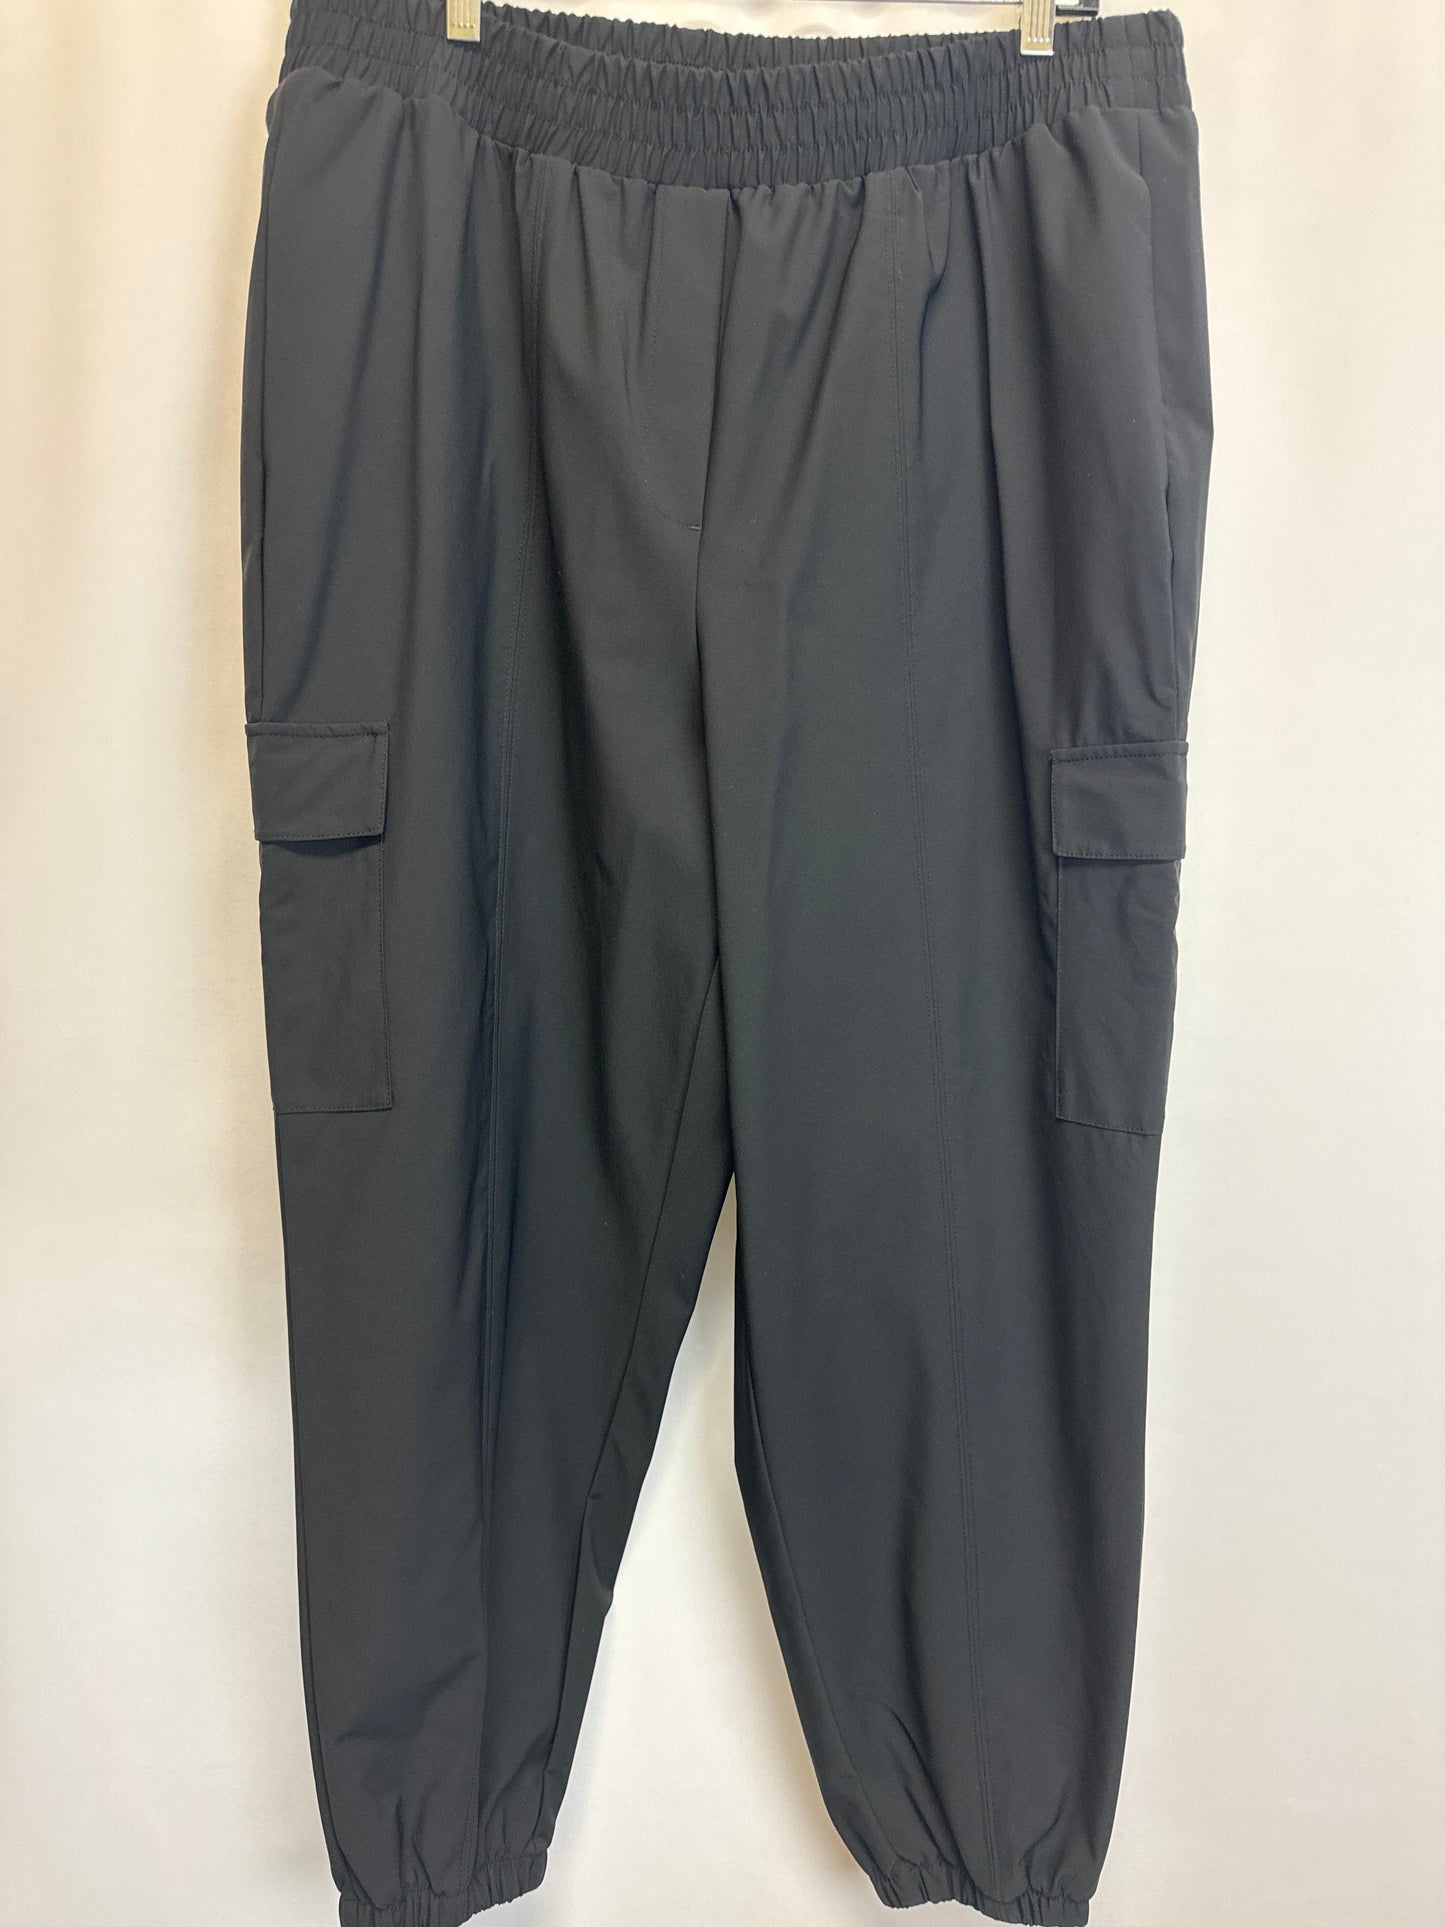 Pants Cargo & Utility By Lane Bryant  Size: 16